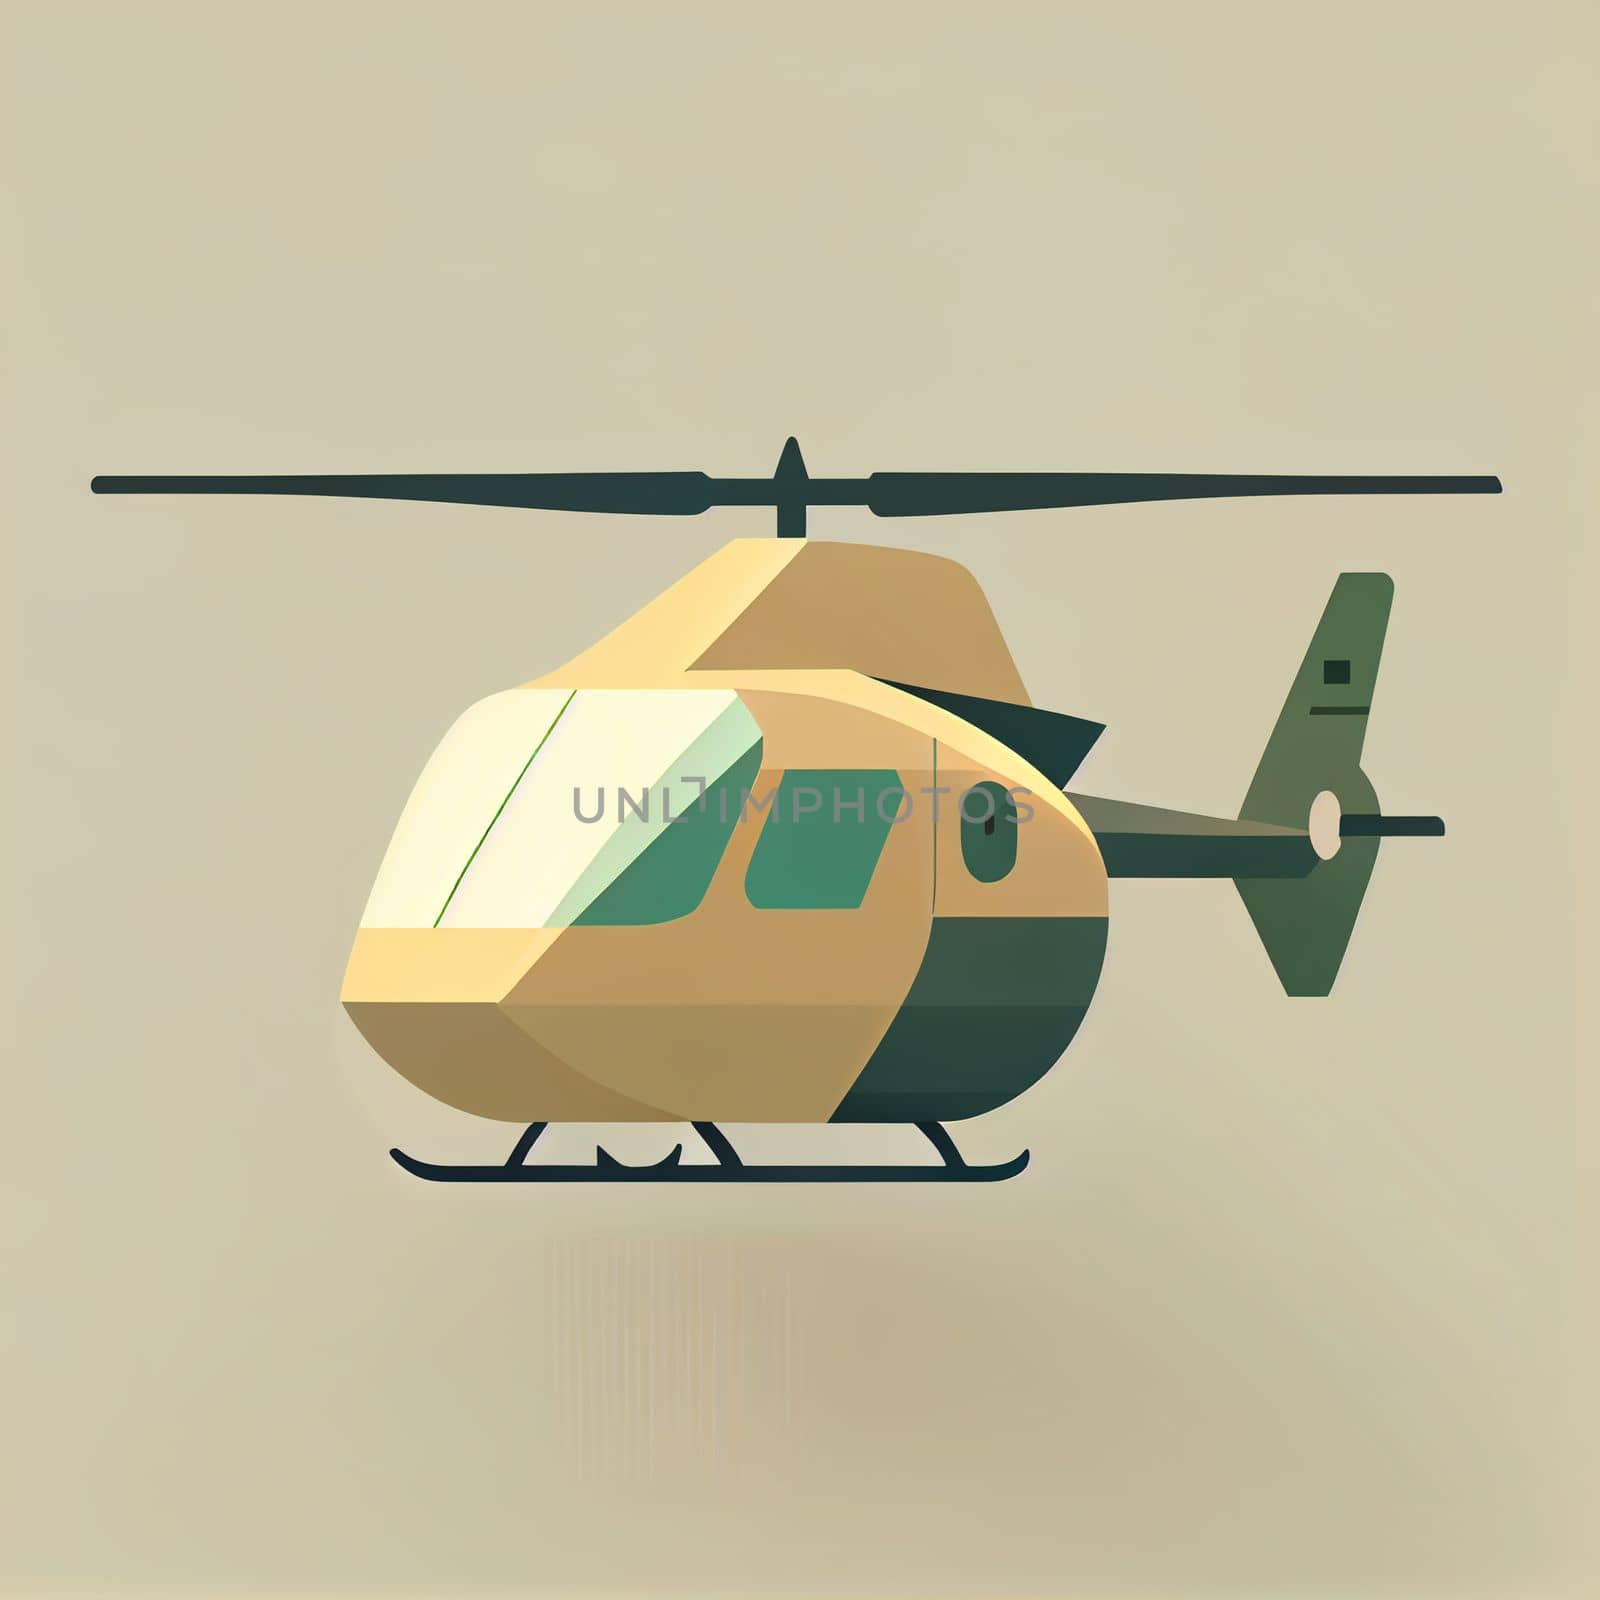 Modern flat design of Transport public transportable helicopter for transportation in city. illustration flat style.